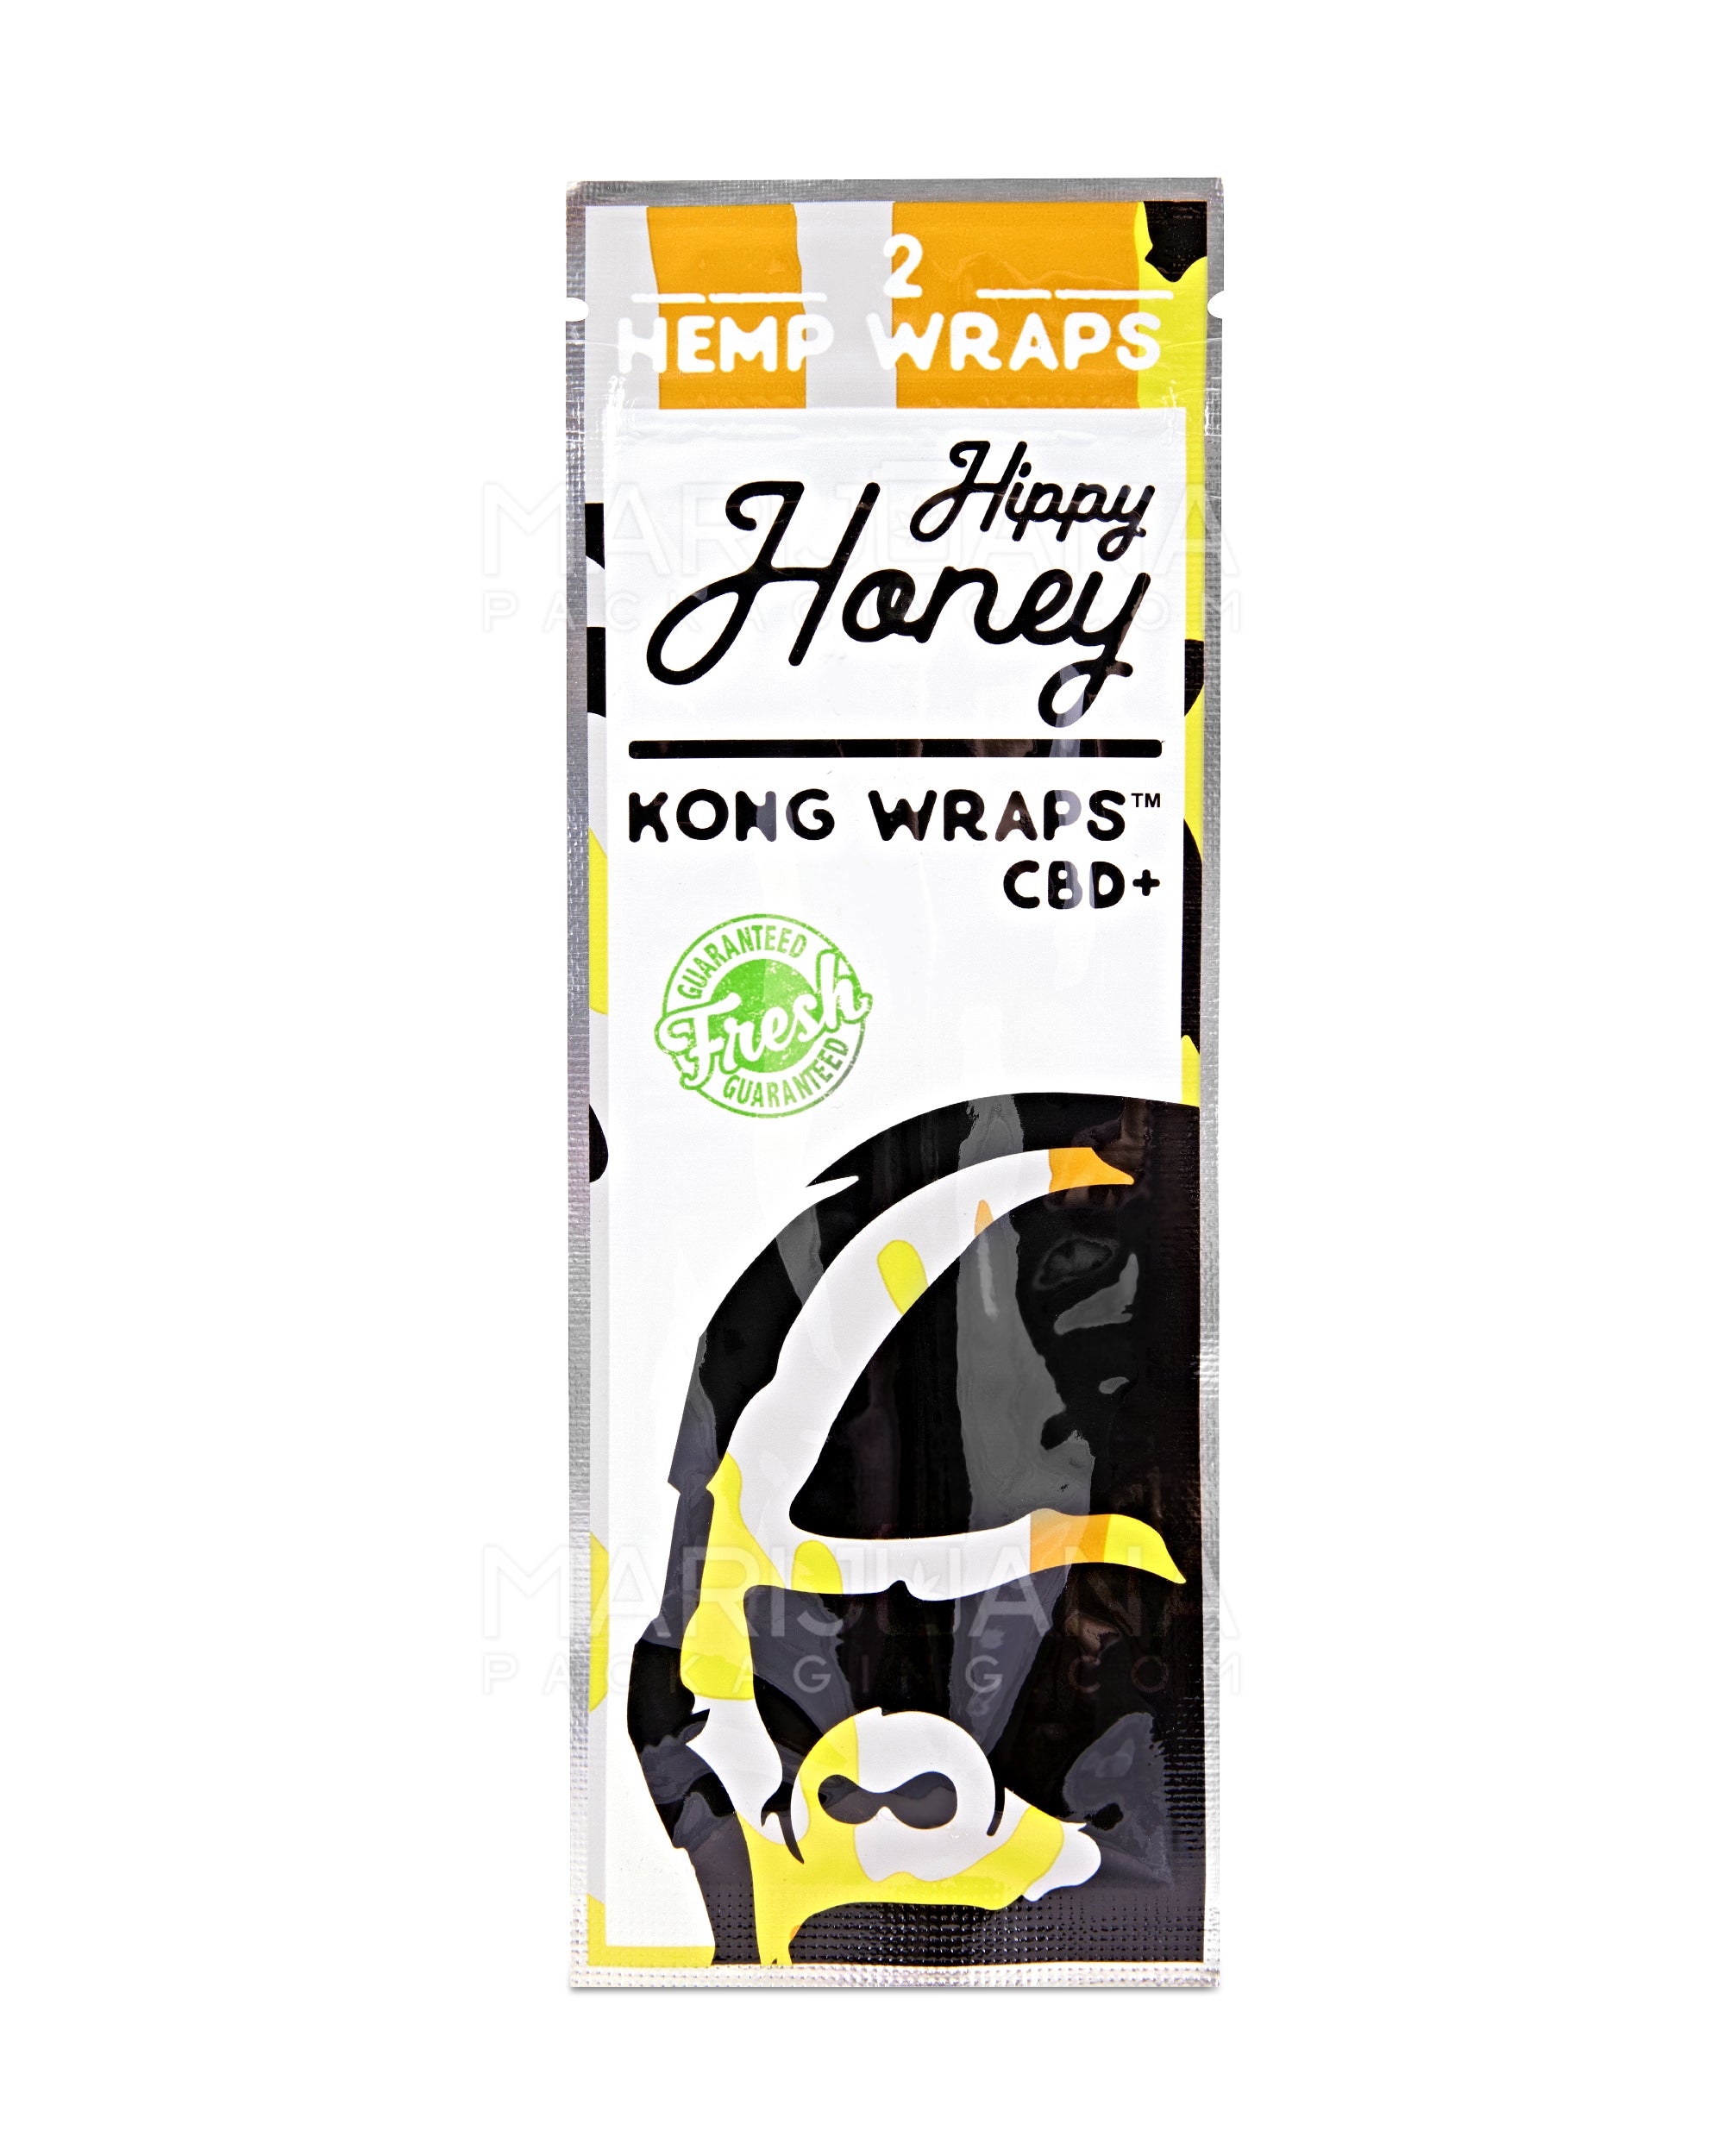 KONG WRAPS | 'Retail Display' Organic Hemp Blunt Wraps | CBD Infused - Hippy Honey - 25 Count